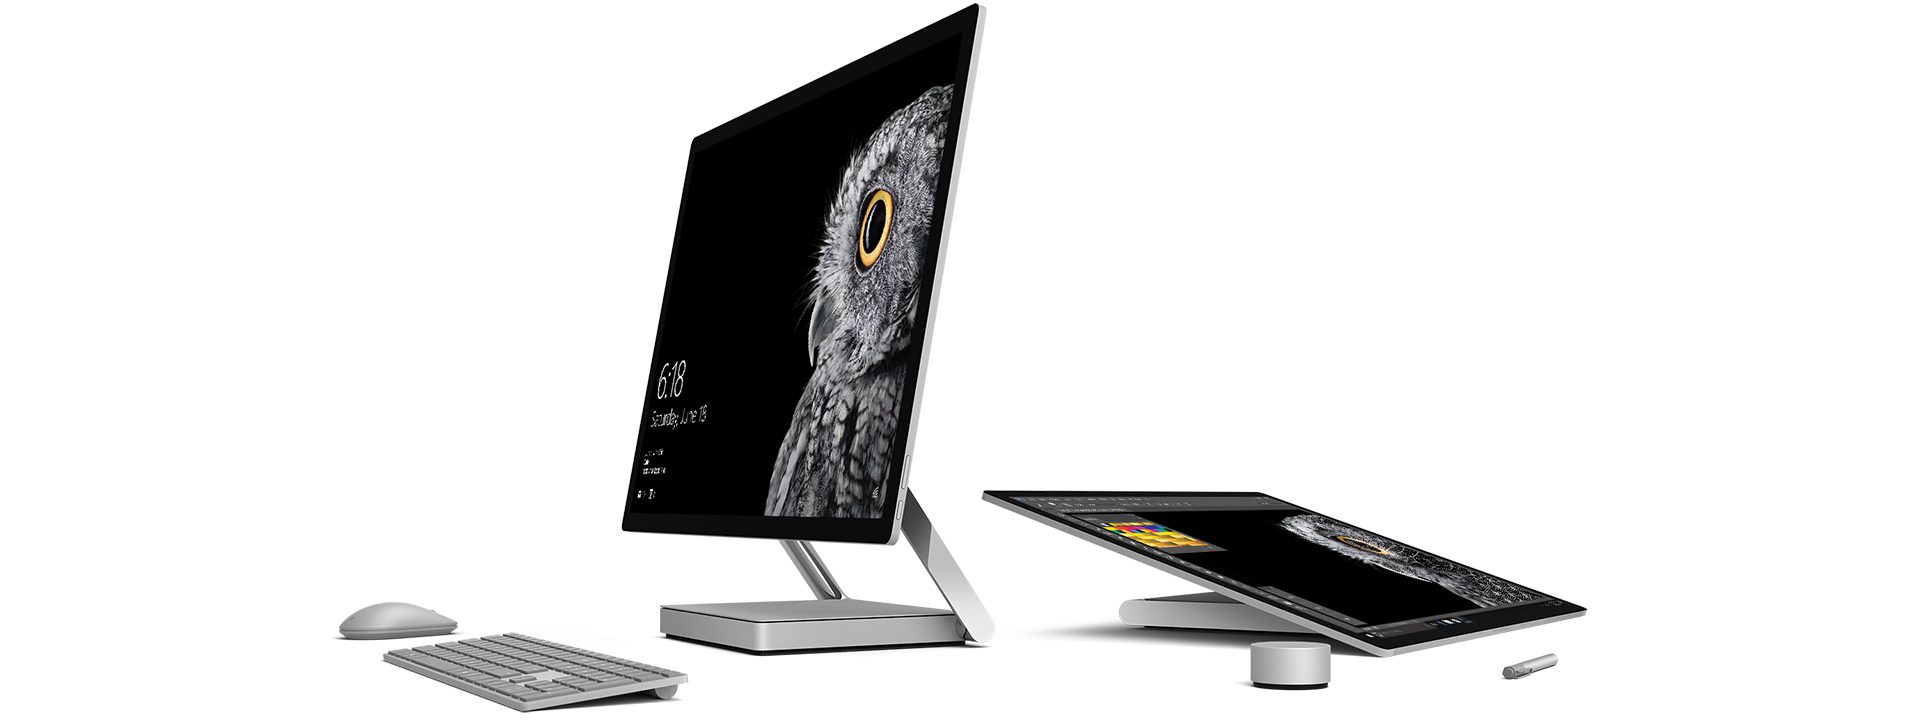 Surface Studio Overview 2 HeroFullBleed V1